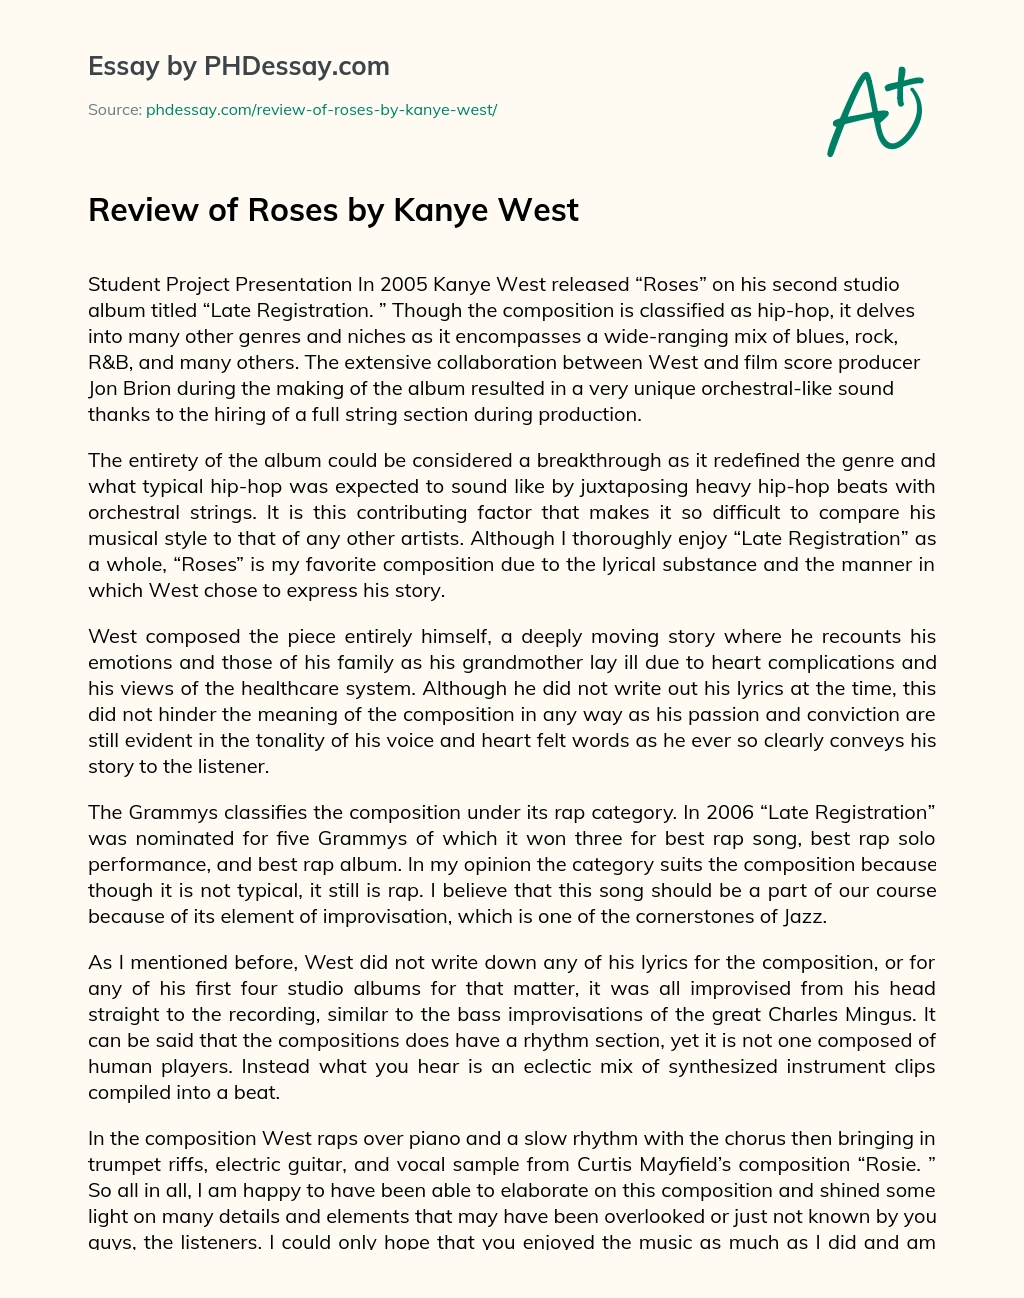 extended essay on kanye west